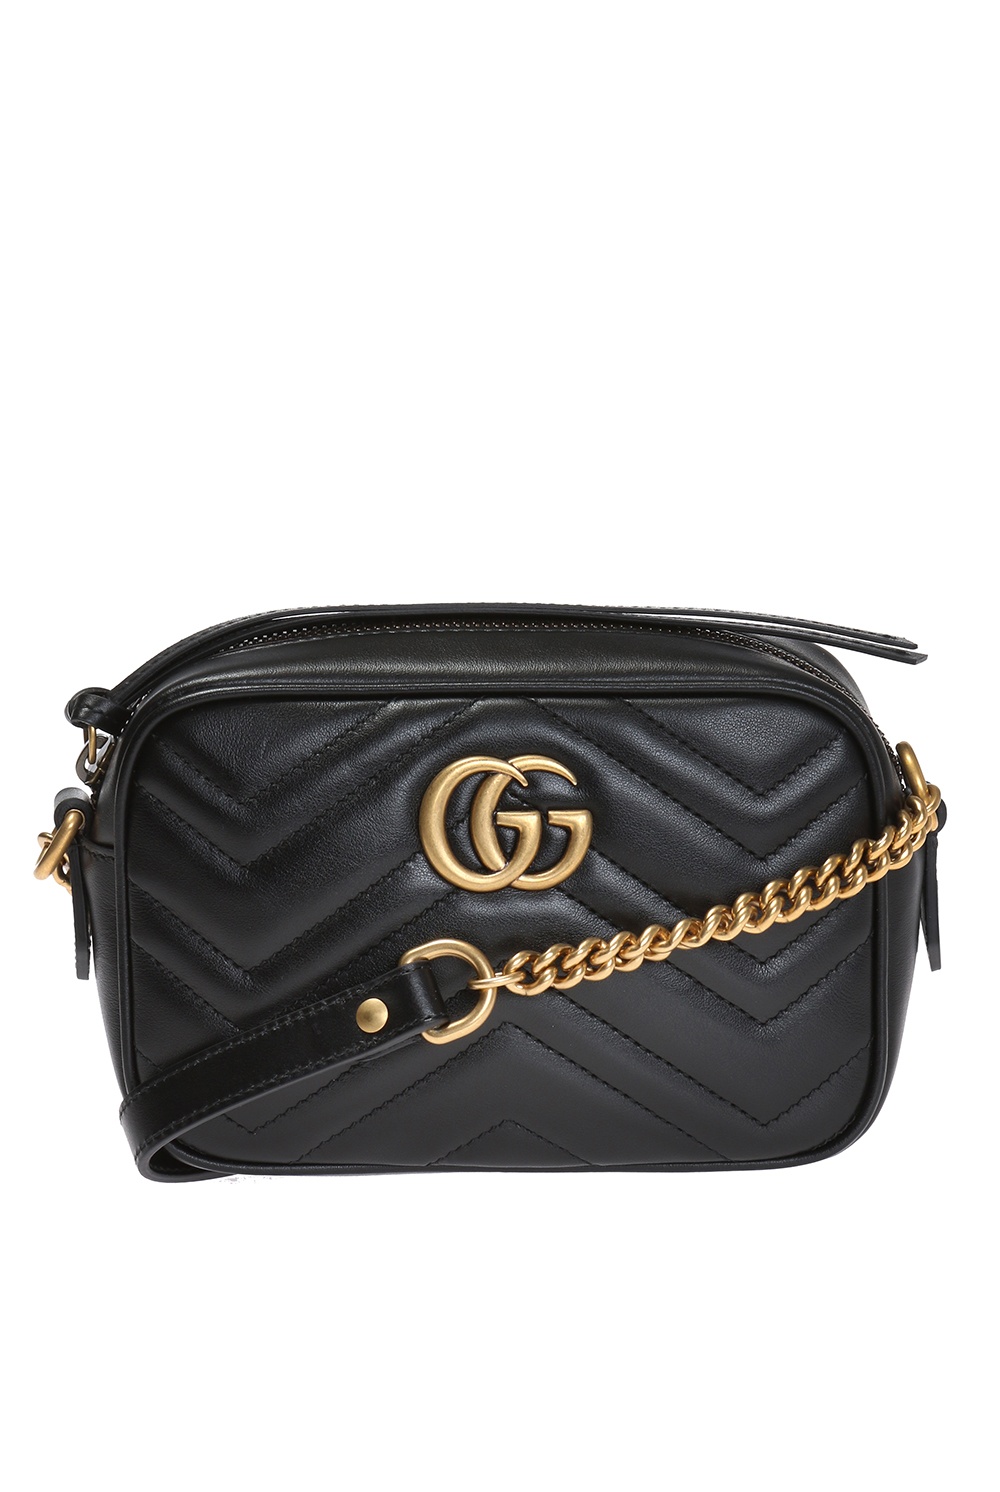 GG Marmont' shoulder bag Gucci - Vitkac US